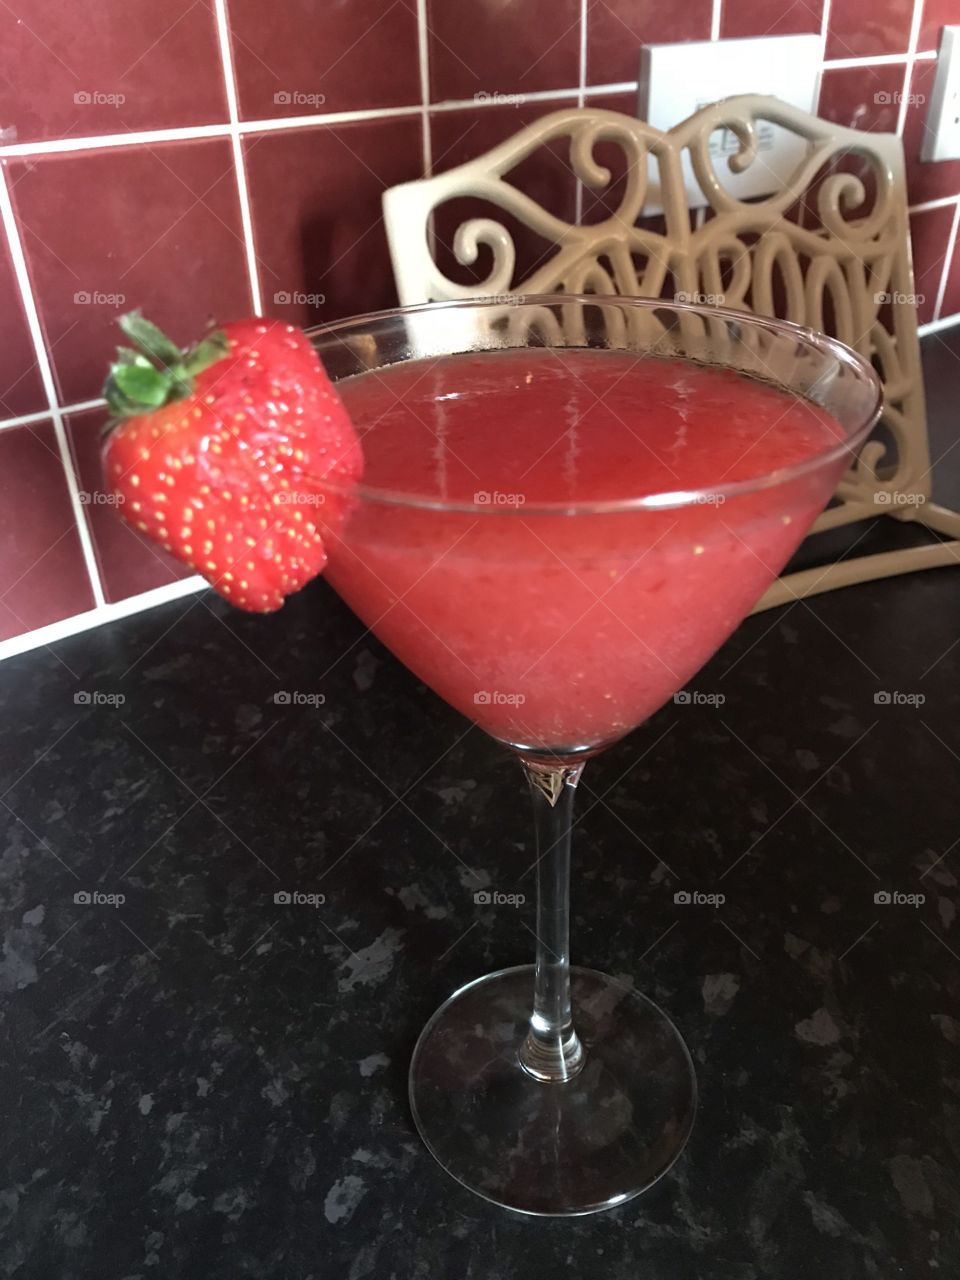 Strawberry Daiquiri with strawberry 